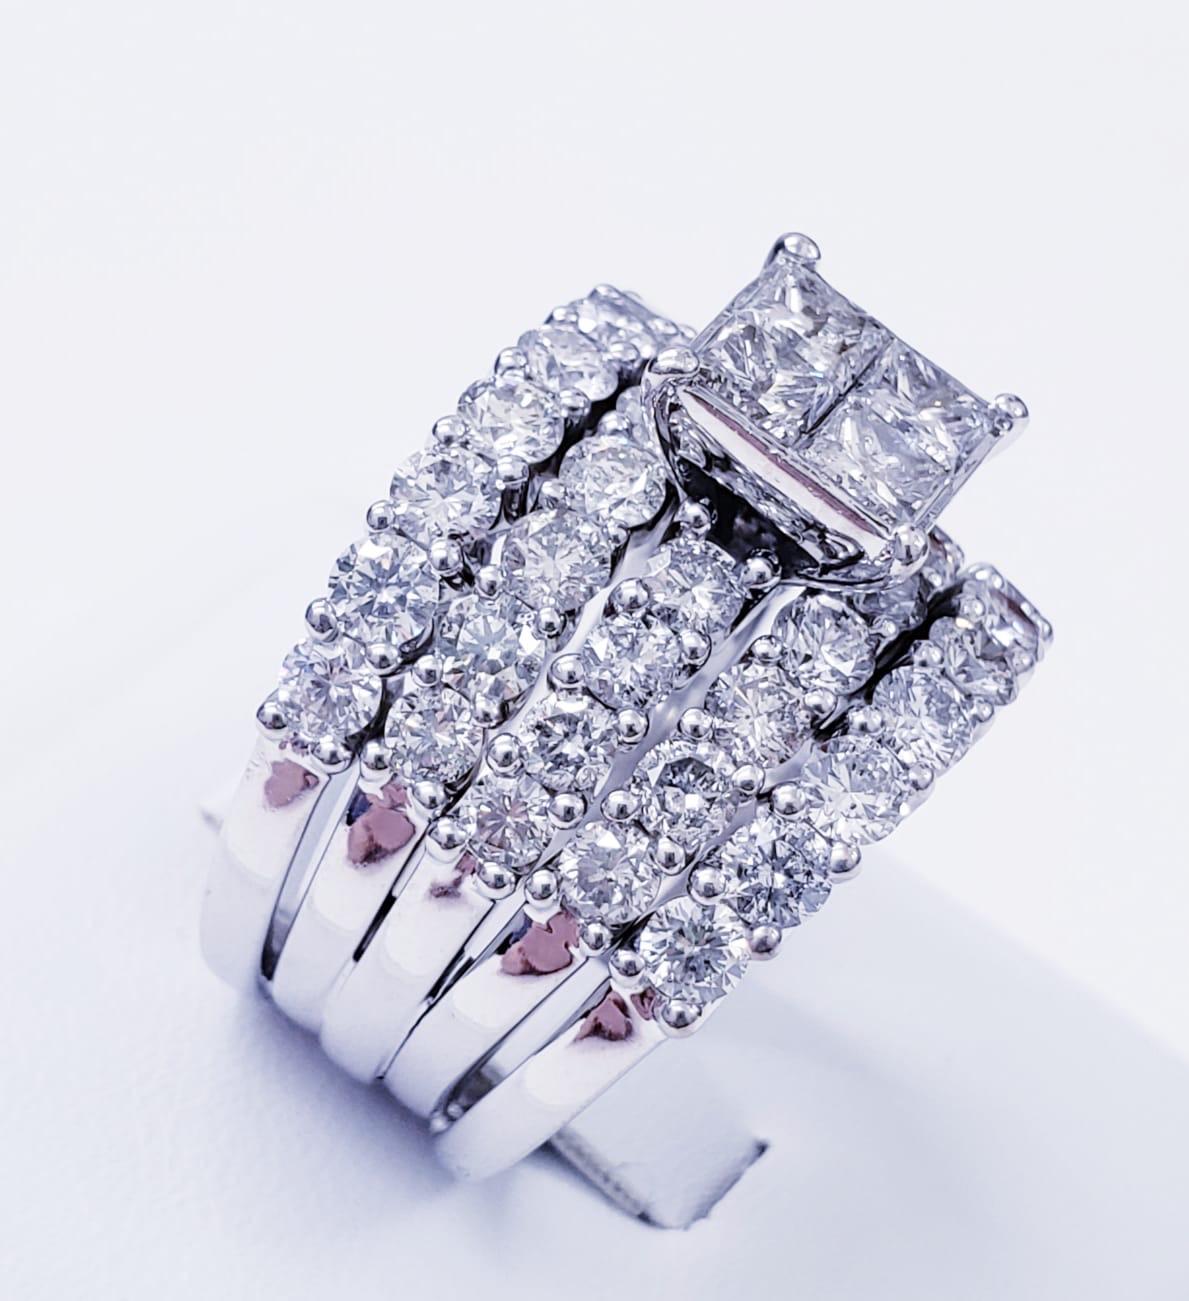 .9 carat diamond ring